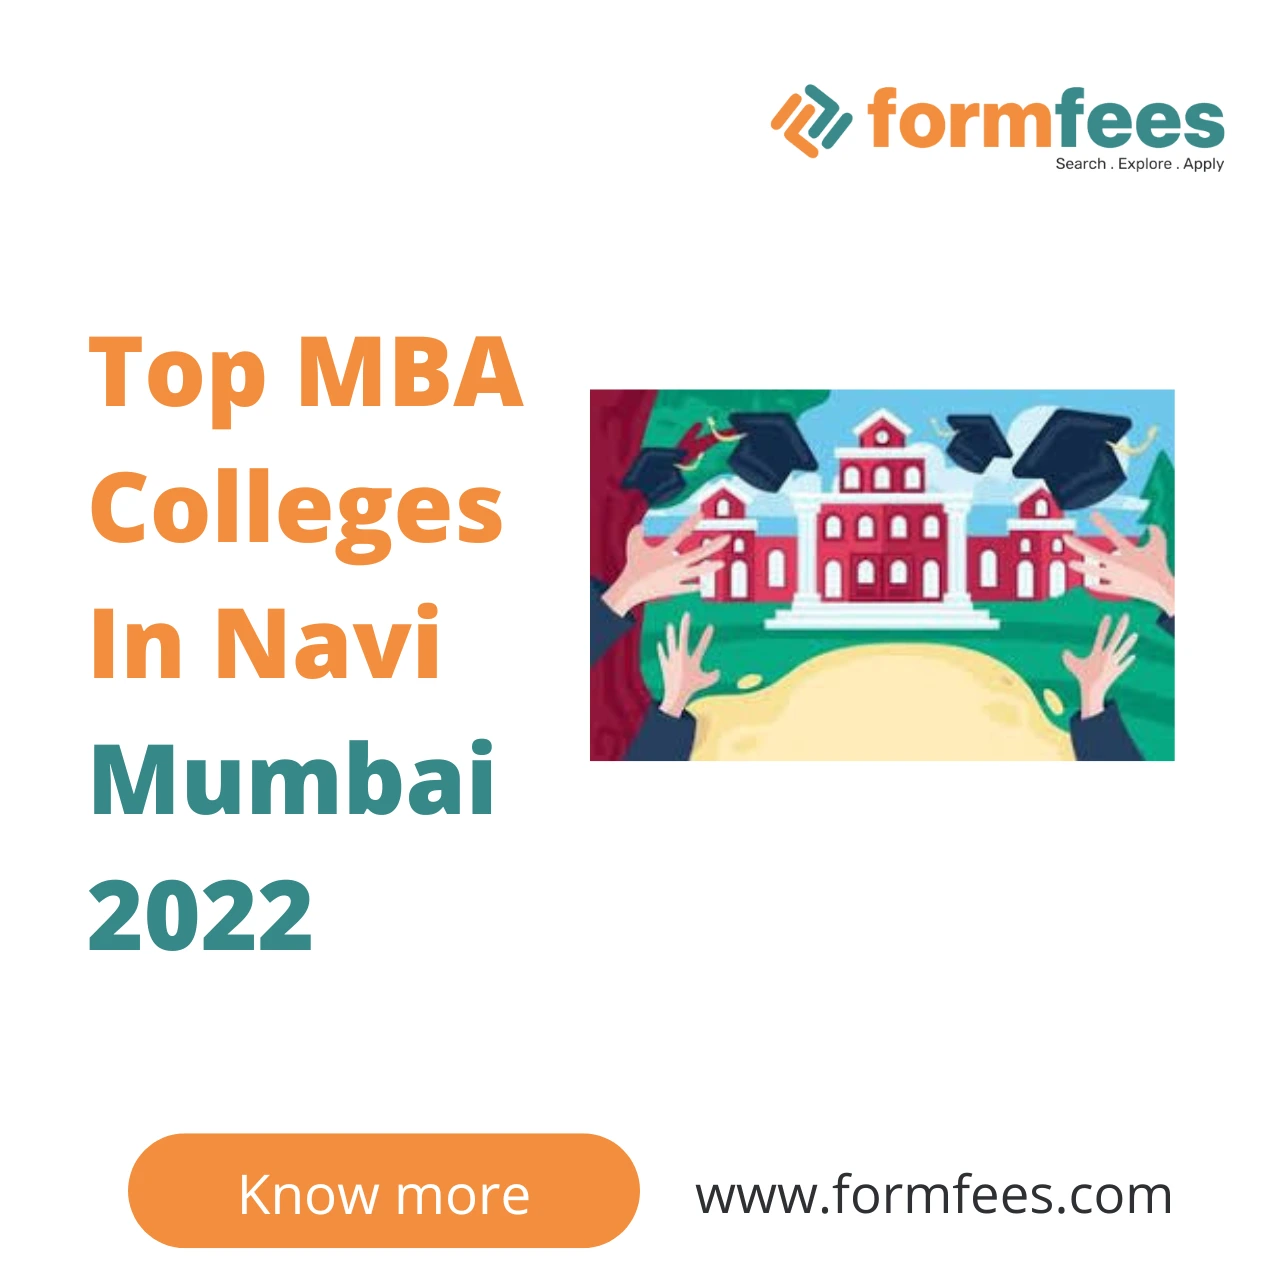 Top MBA Colleges In Navi Mumbai 2022